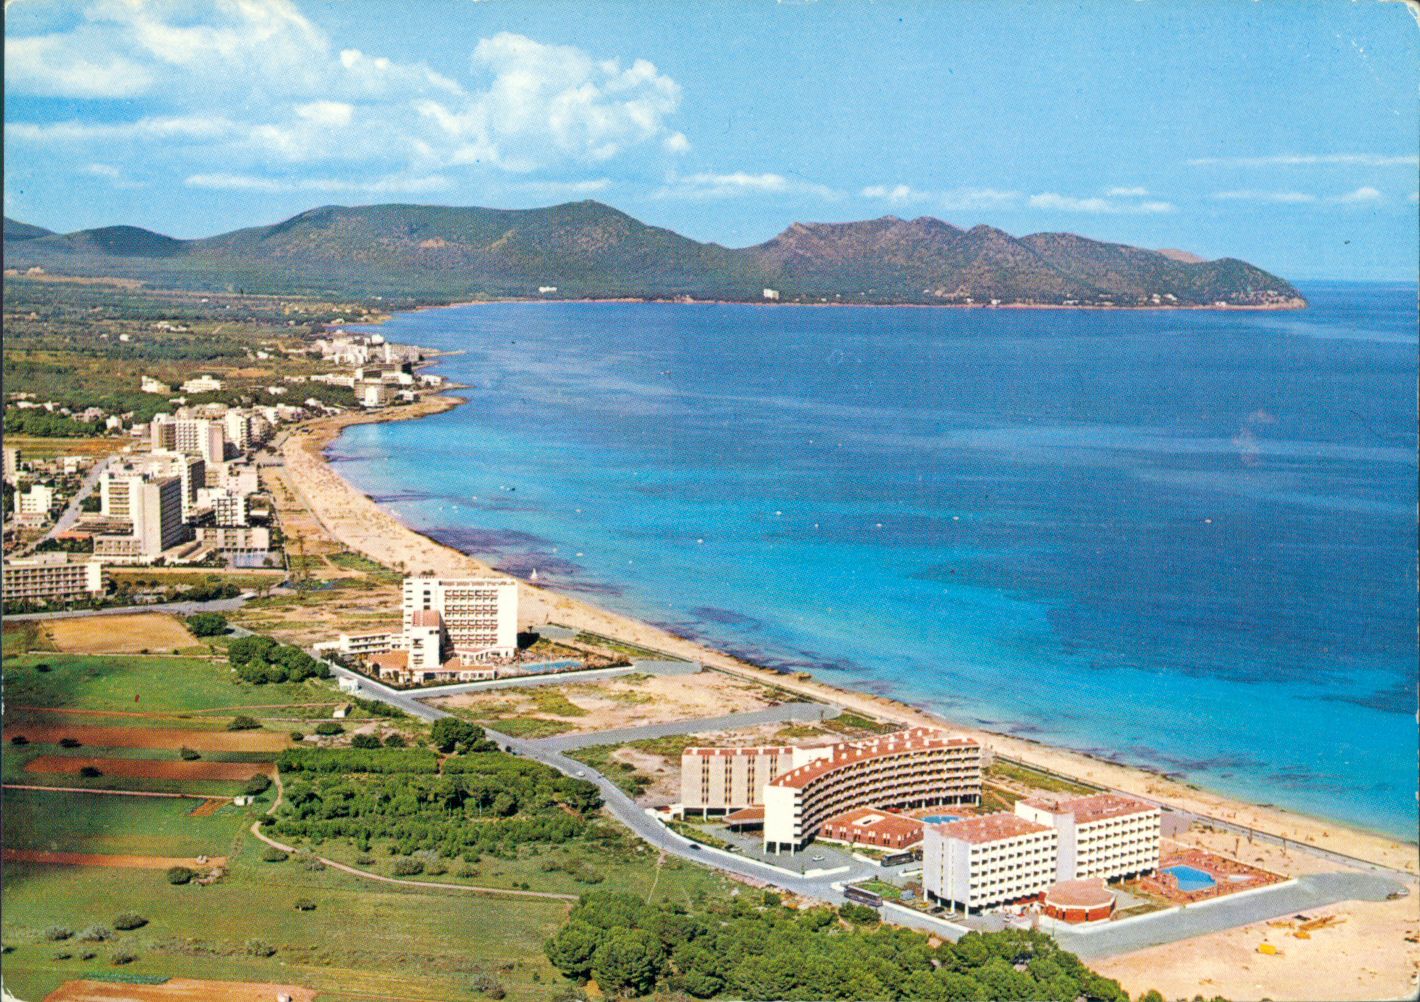 Blick ins Archiv – so sah es früher im Urlaubsort Cala Millor auf Mallorca aus